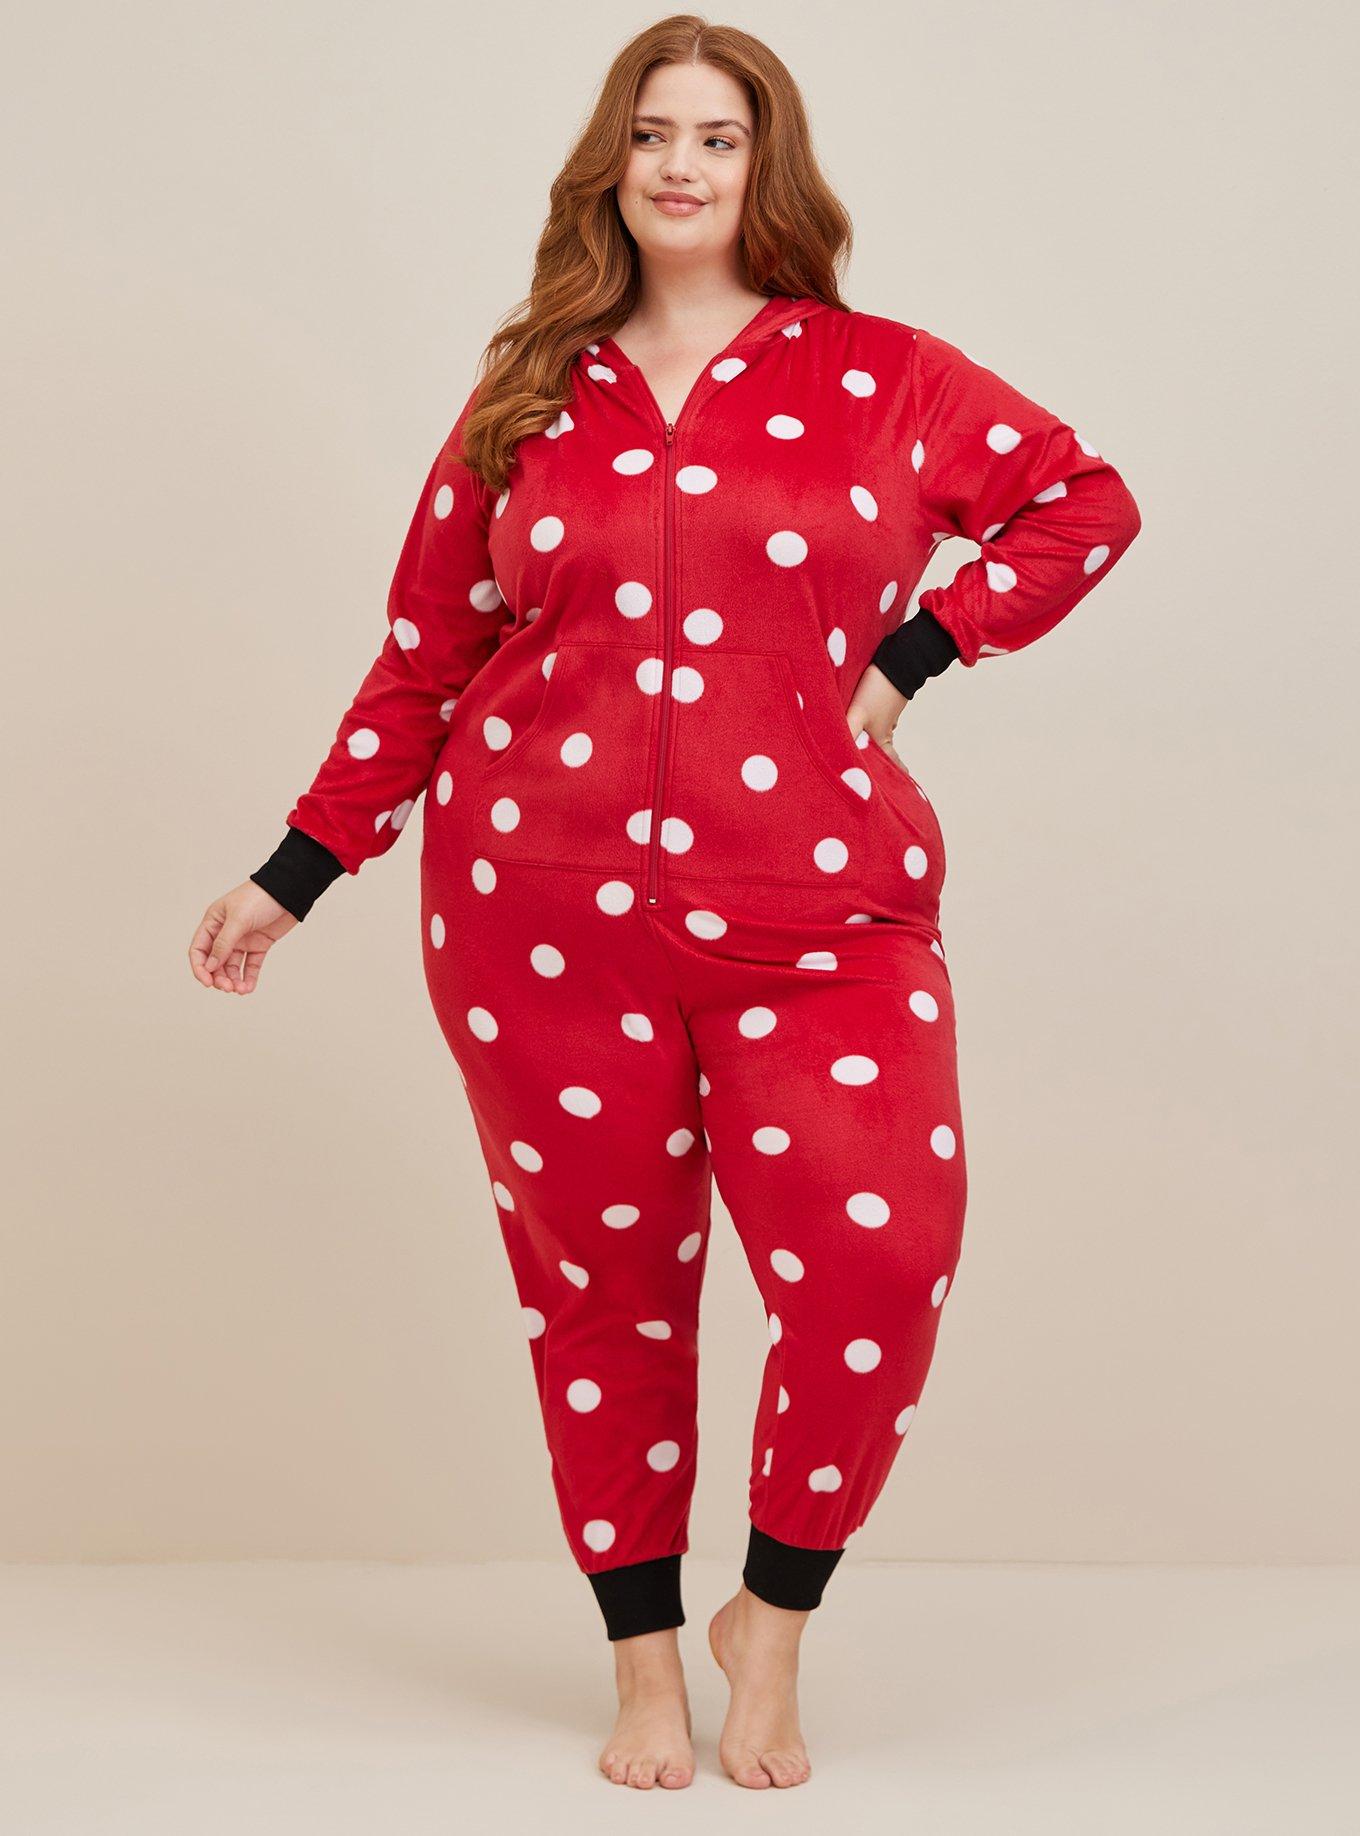 Disney Women's Minnie Mouse Long Sleeve One Piece Pajama